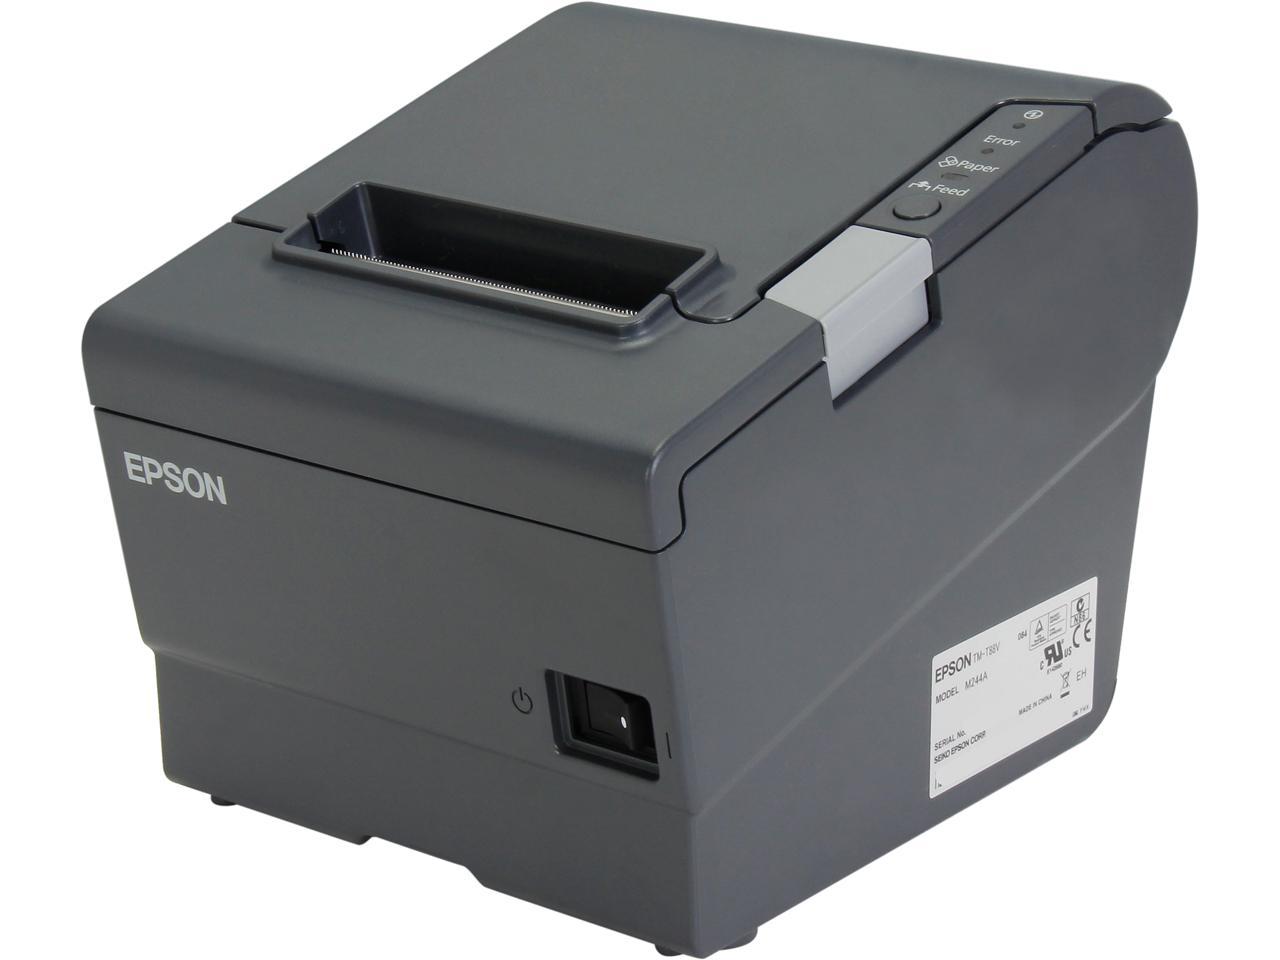 Epson Tm T88v Direct Thermal Printer Monochrome Desktop Receipt Print 8705